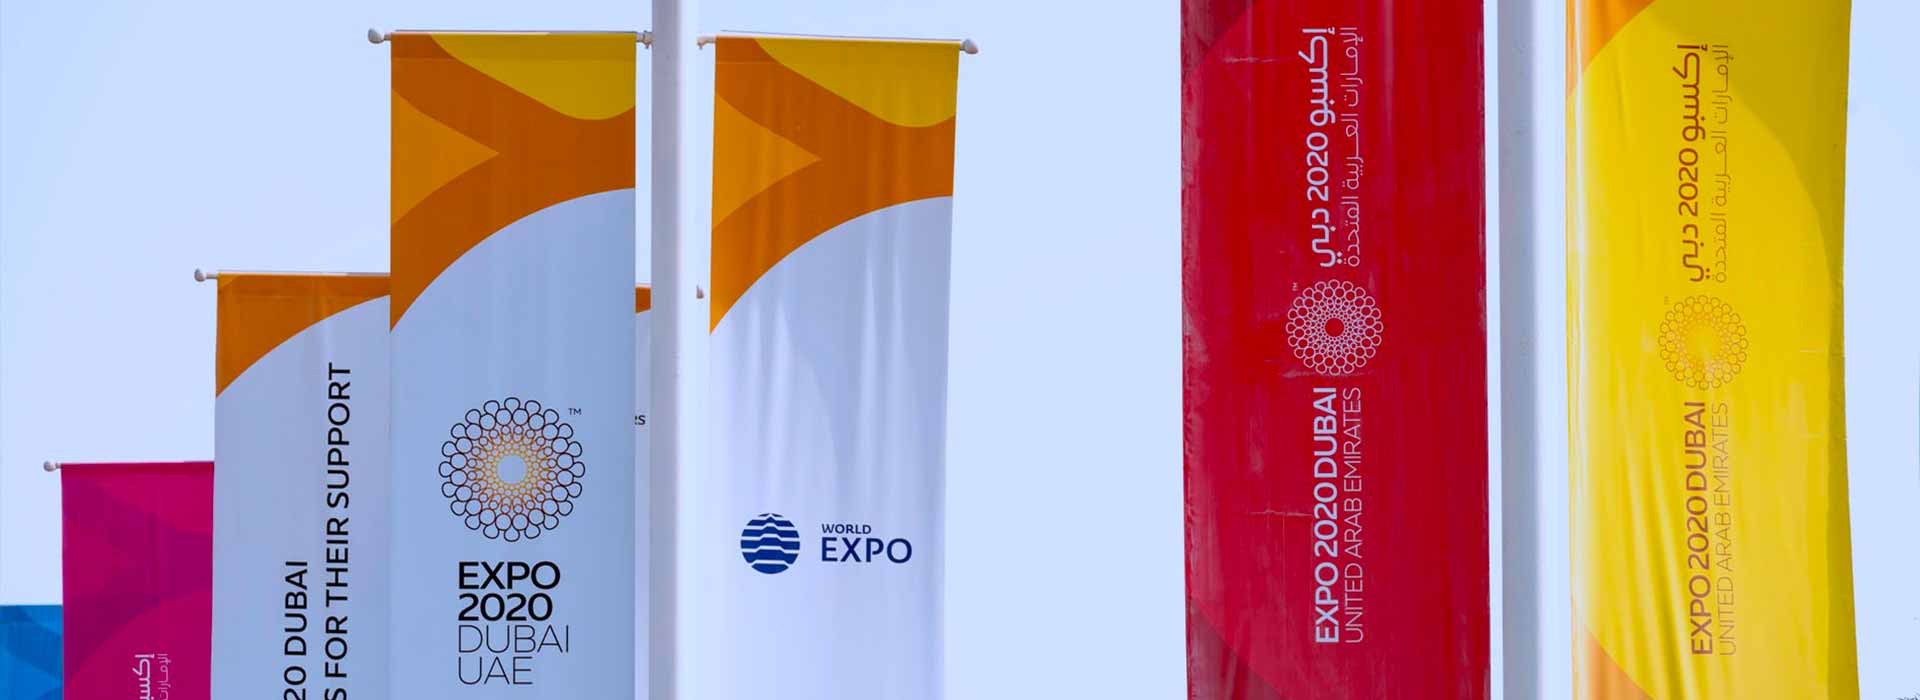 Expo Dubai 2020, Padiglione Italia